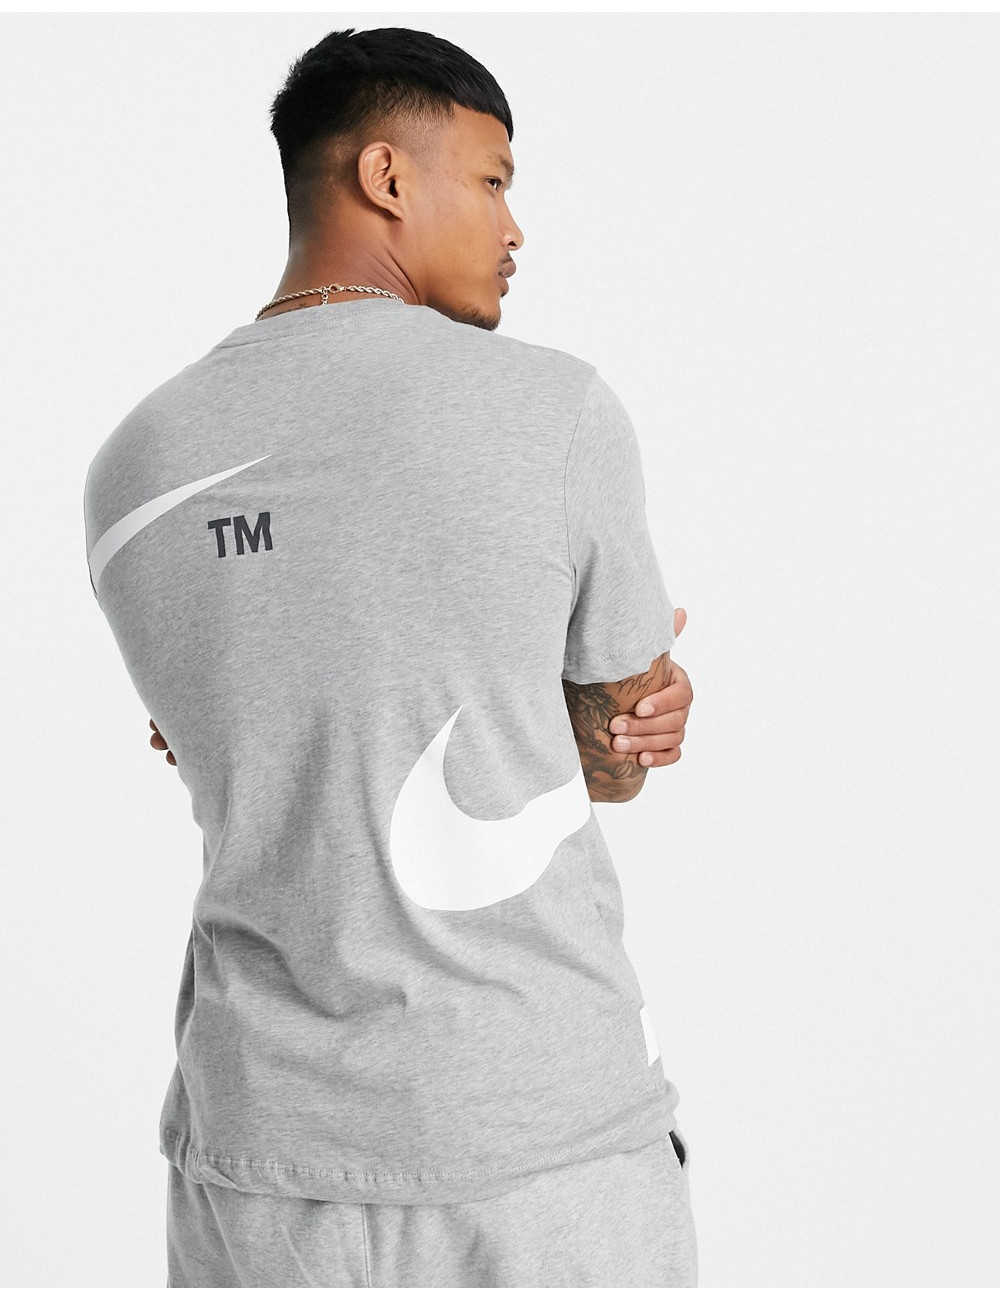 Nike Swoosh t-shirt in grey